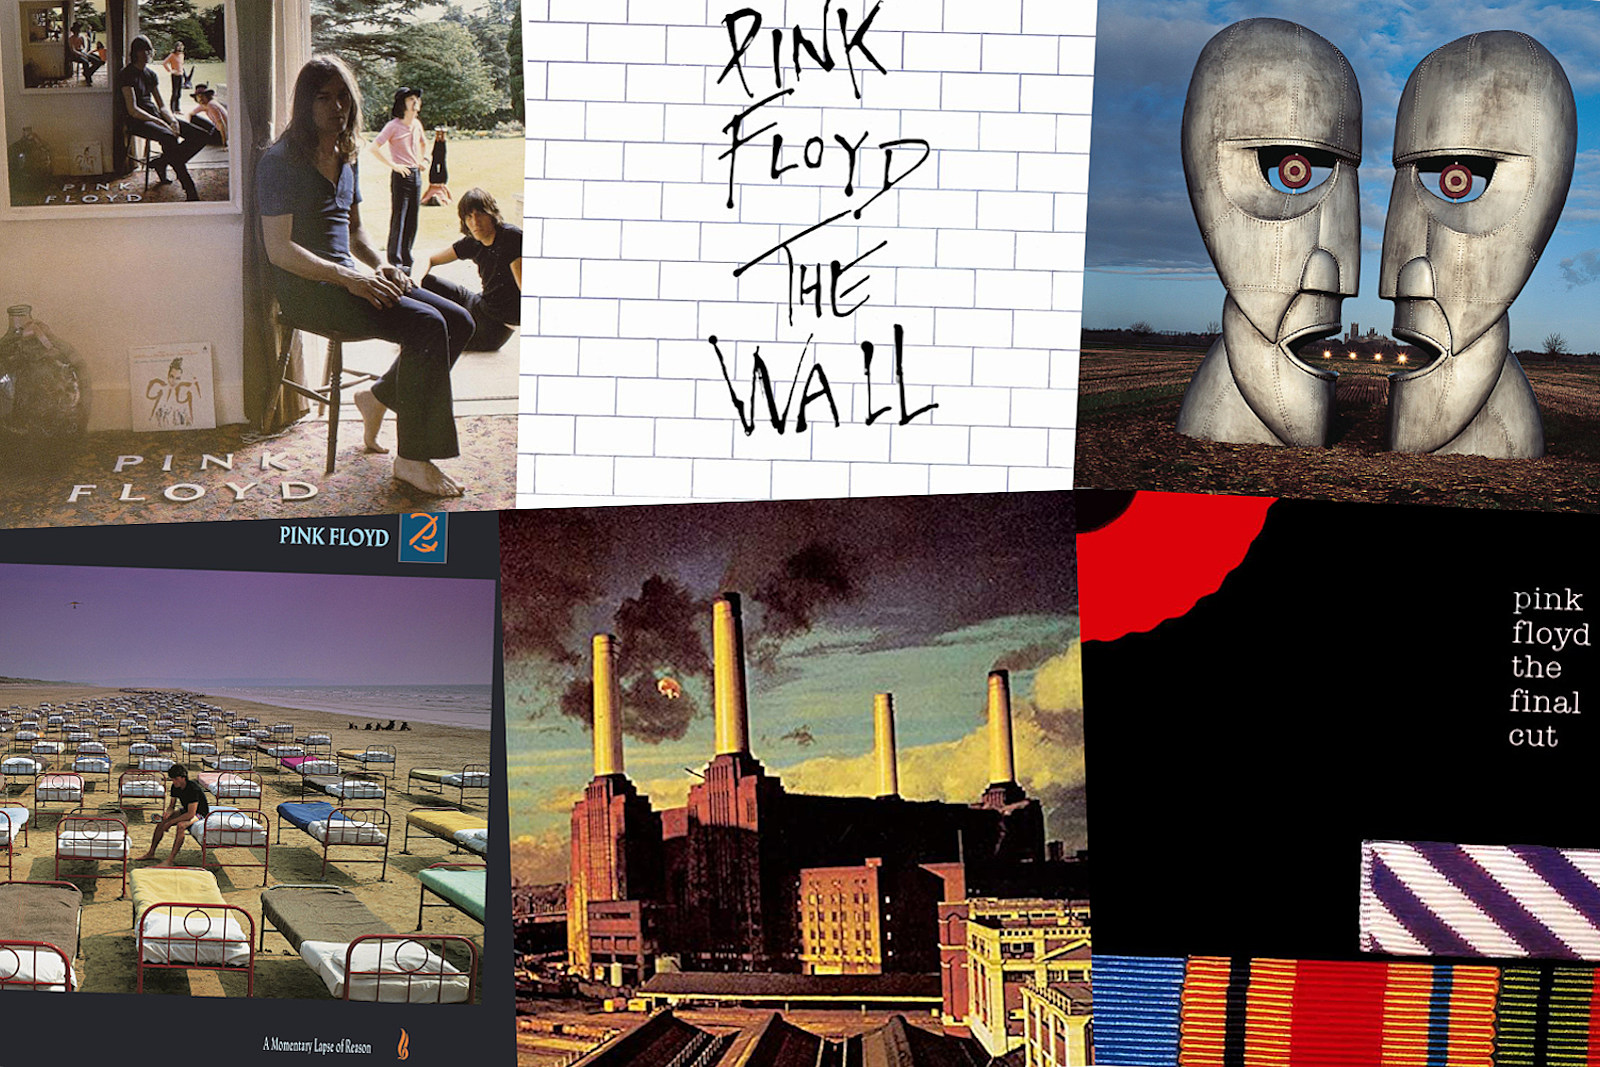 pink floyd the wall album download kickass